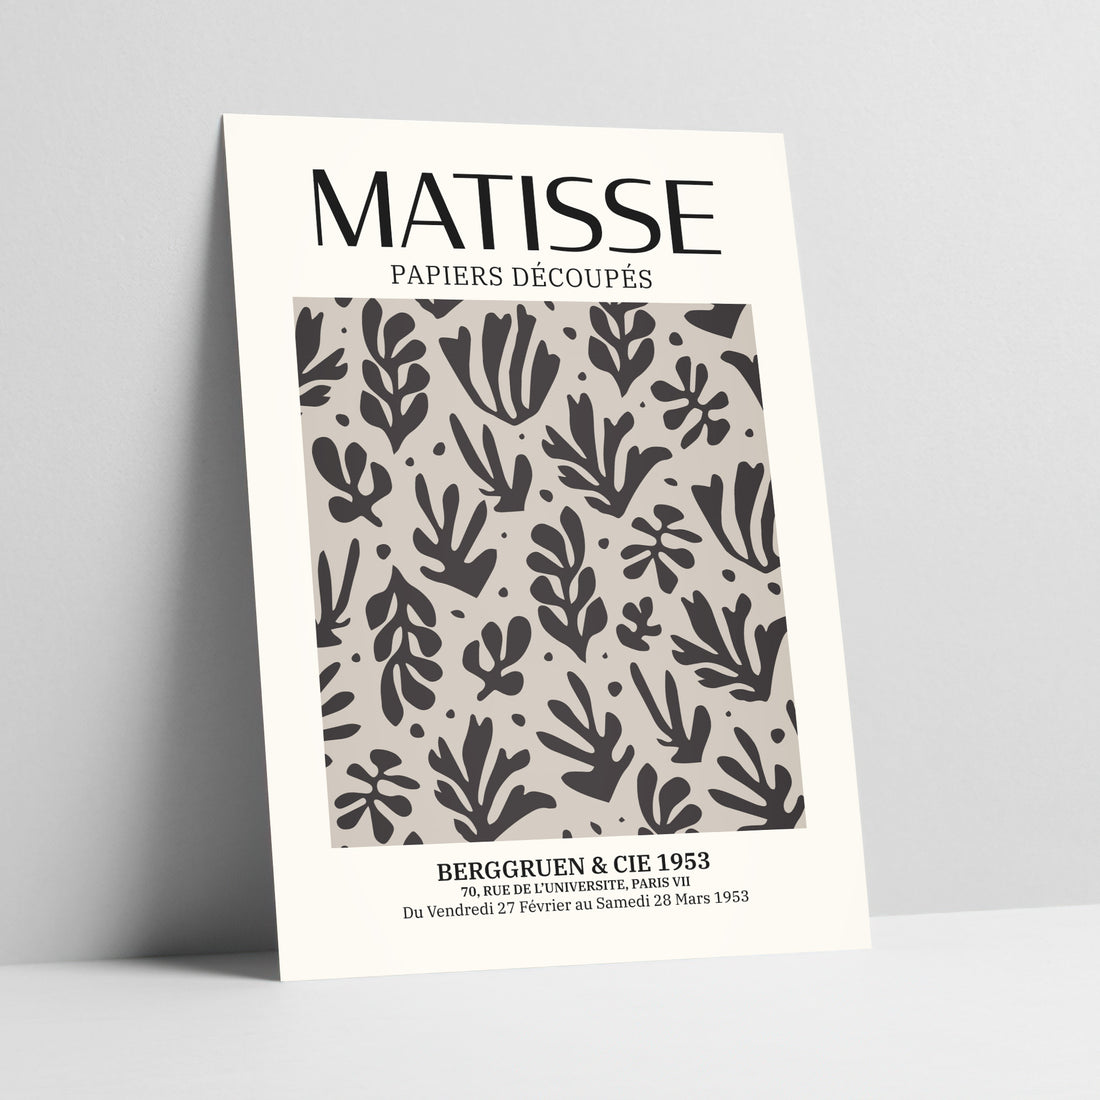 Monochrome Matisse Foliage Pattern - Henri Matisse Art Print